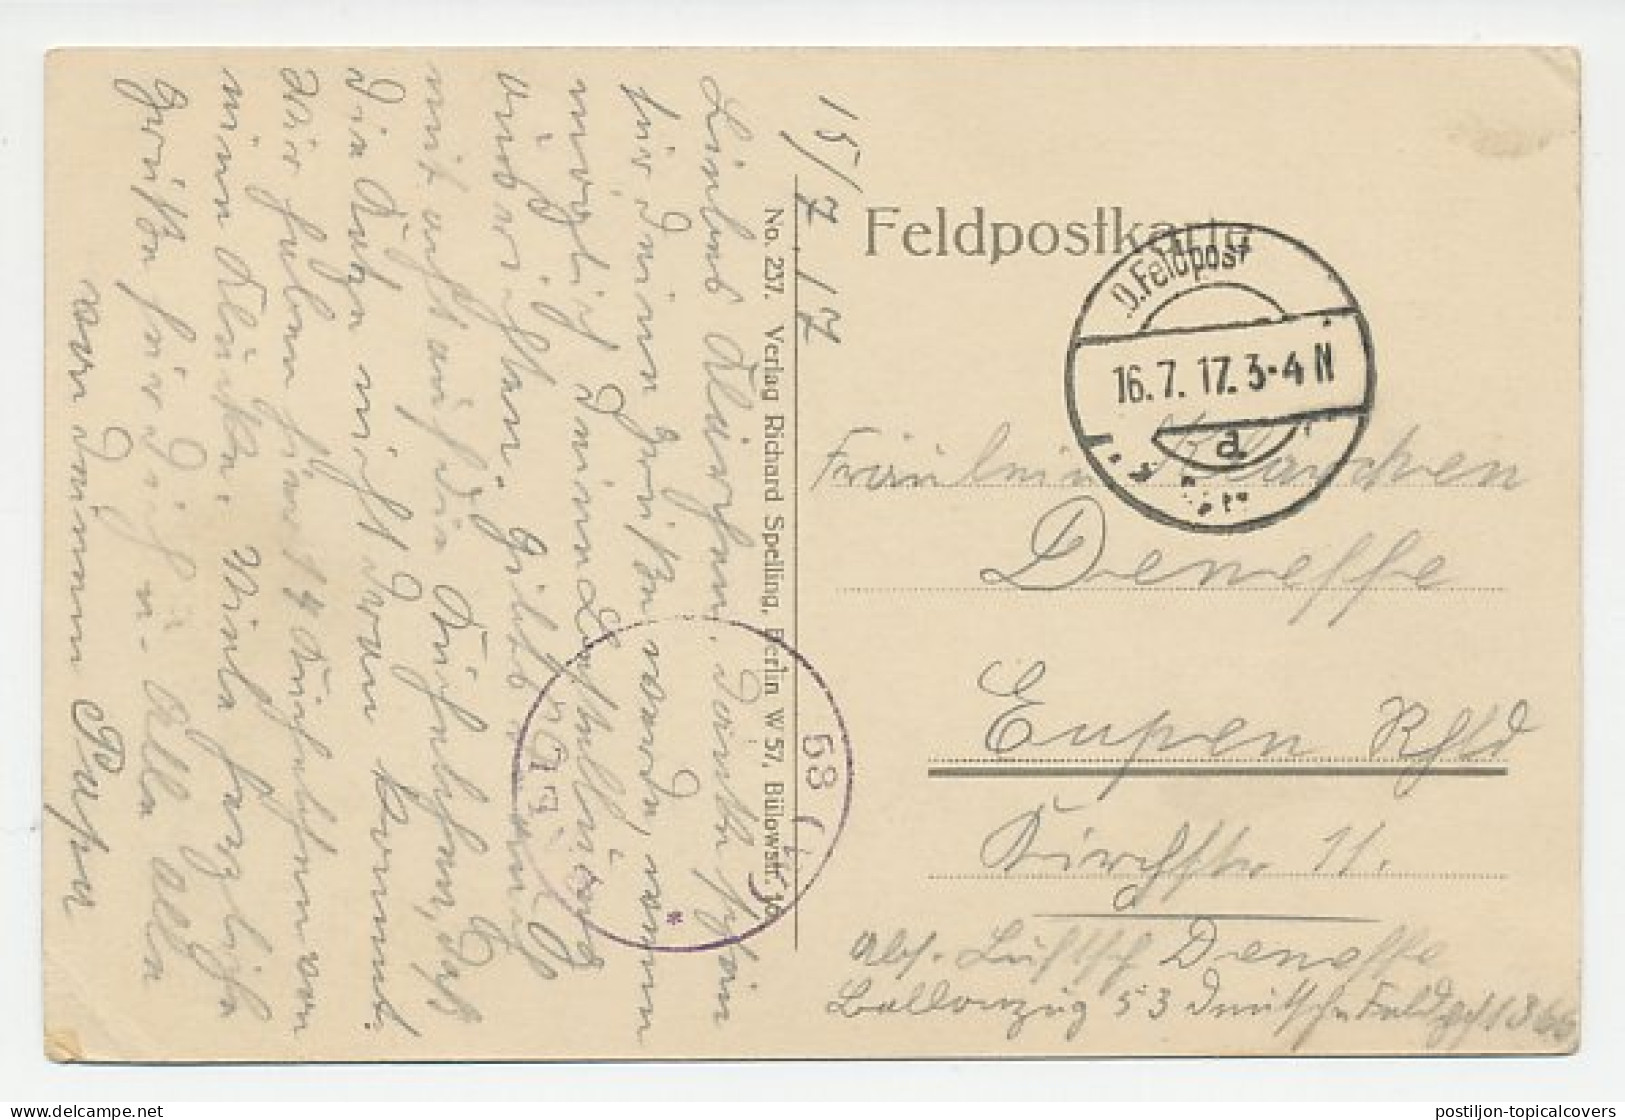 Fieldpost Postcard Germany / France 1917 War Violence - Manre - WWI - 1. Weltkrieg